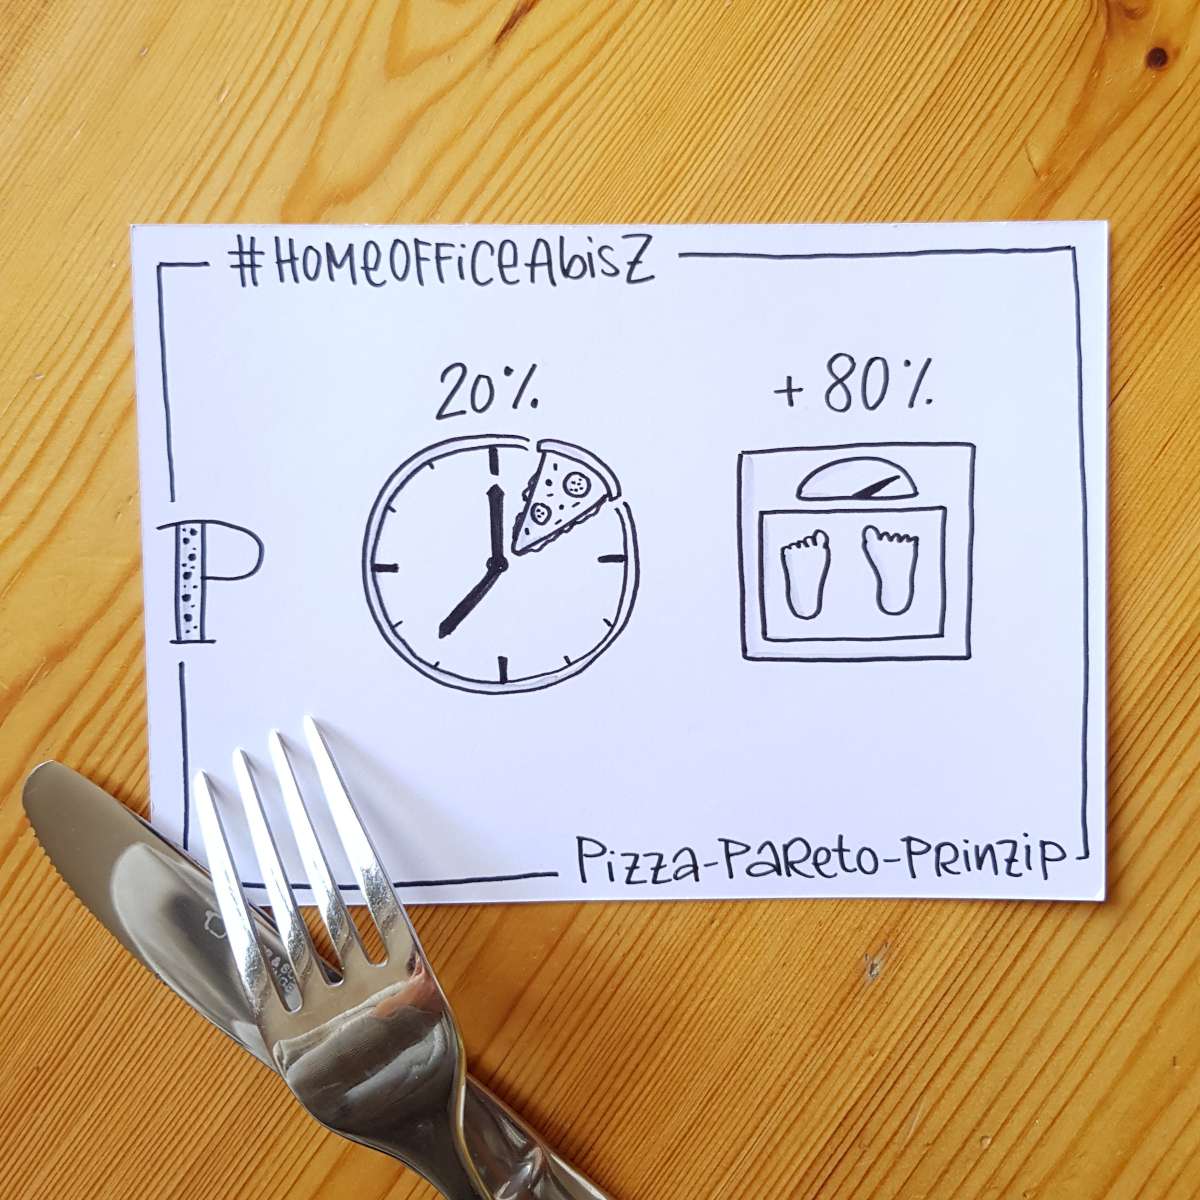 P wie Pizza-Pareto-Prinzip